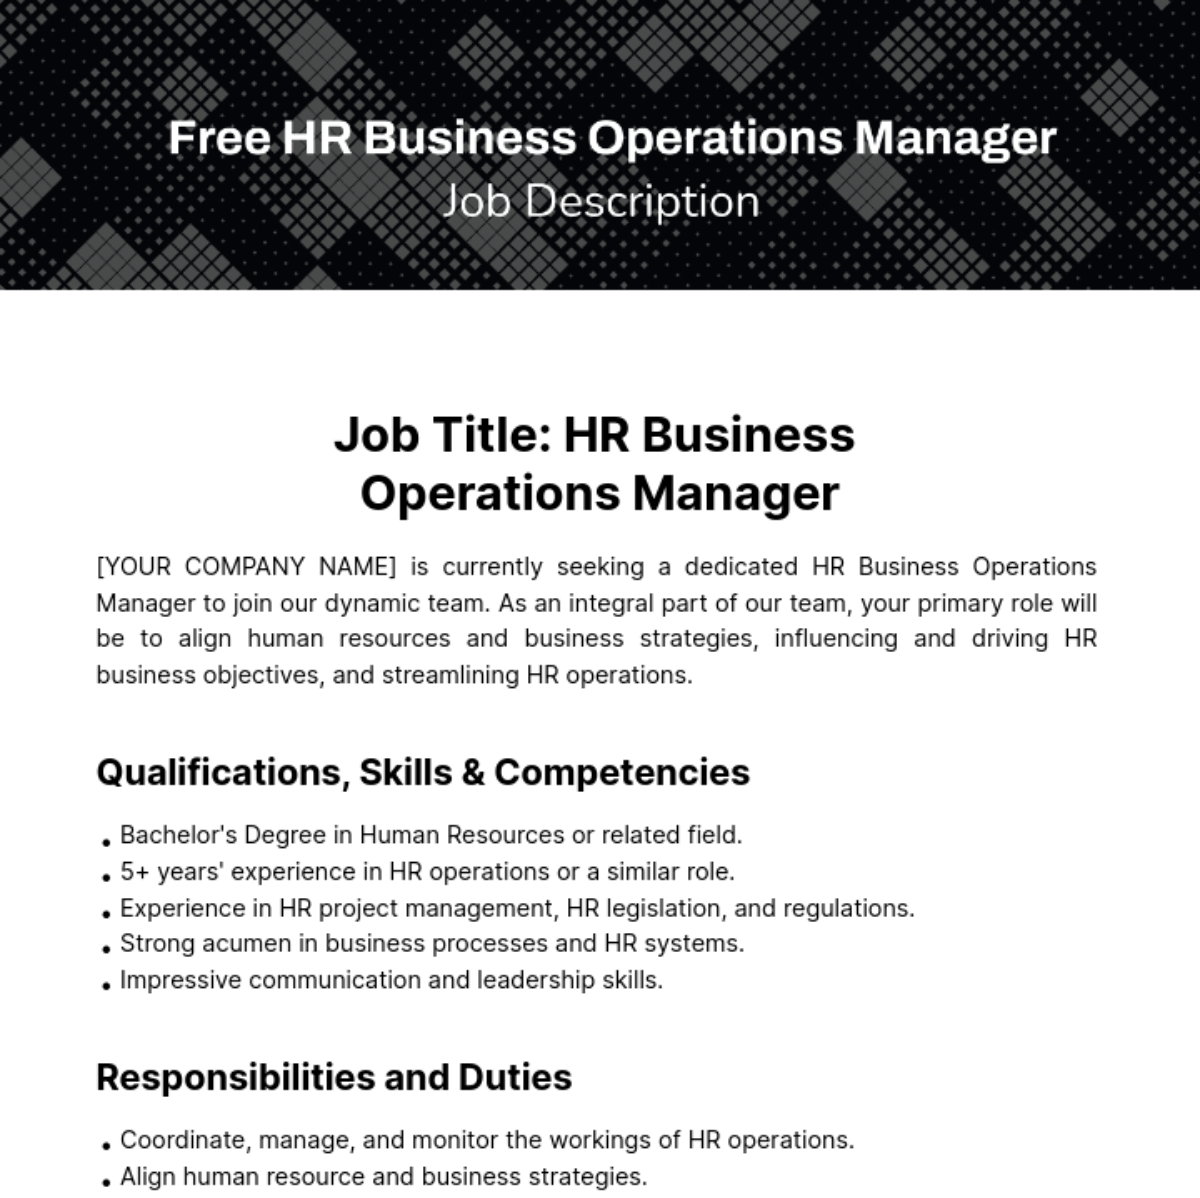 HR Business Operations Manager Job Description Template